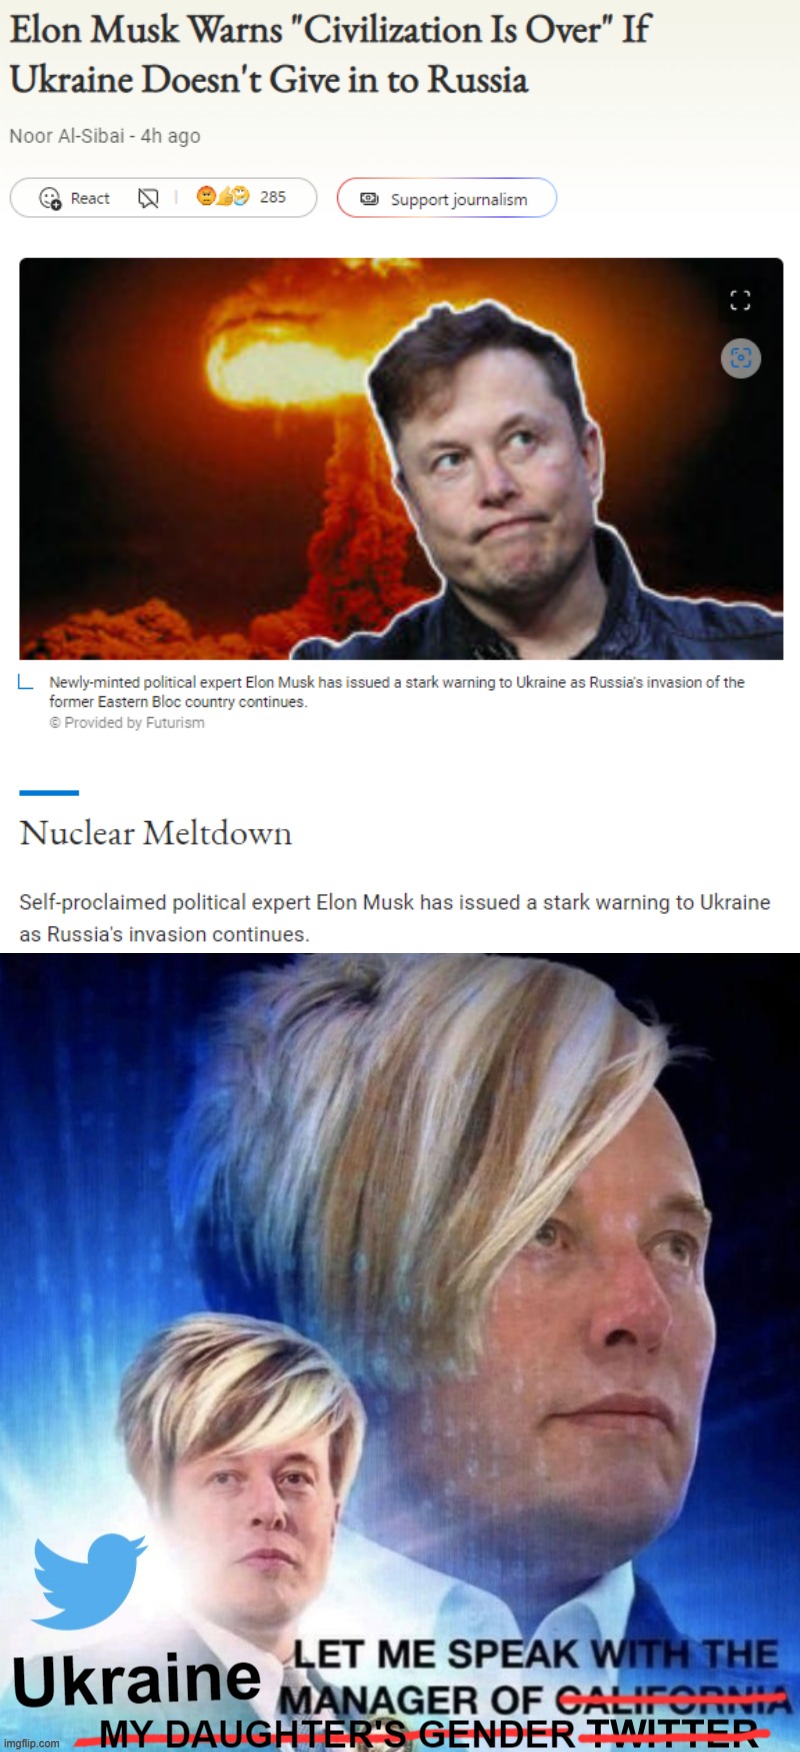 Career Kremlinologist Elon Musk | image tagged in elon musk ukraine nuclear meltdown,elon musk karen ukraine edition,elon musk,career,kremlinologist,nuclear war | made w/ Imgflip meme maker